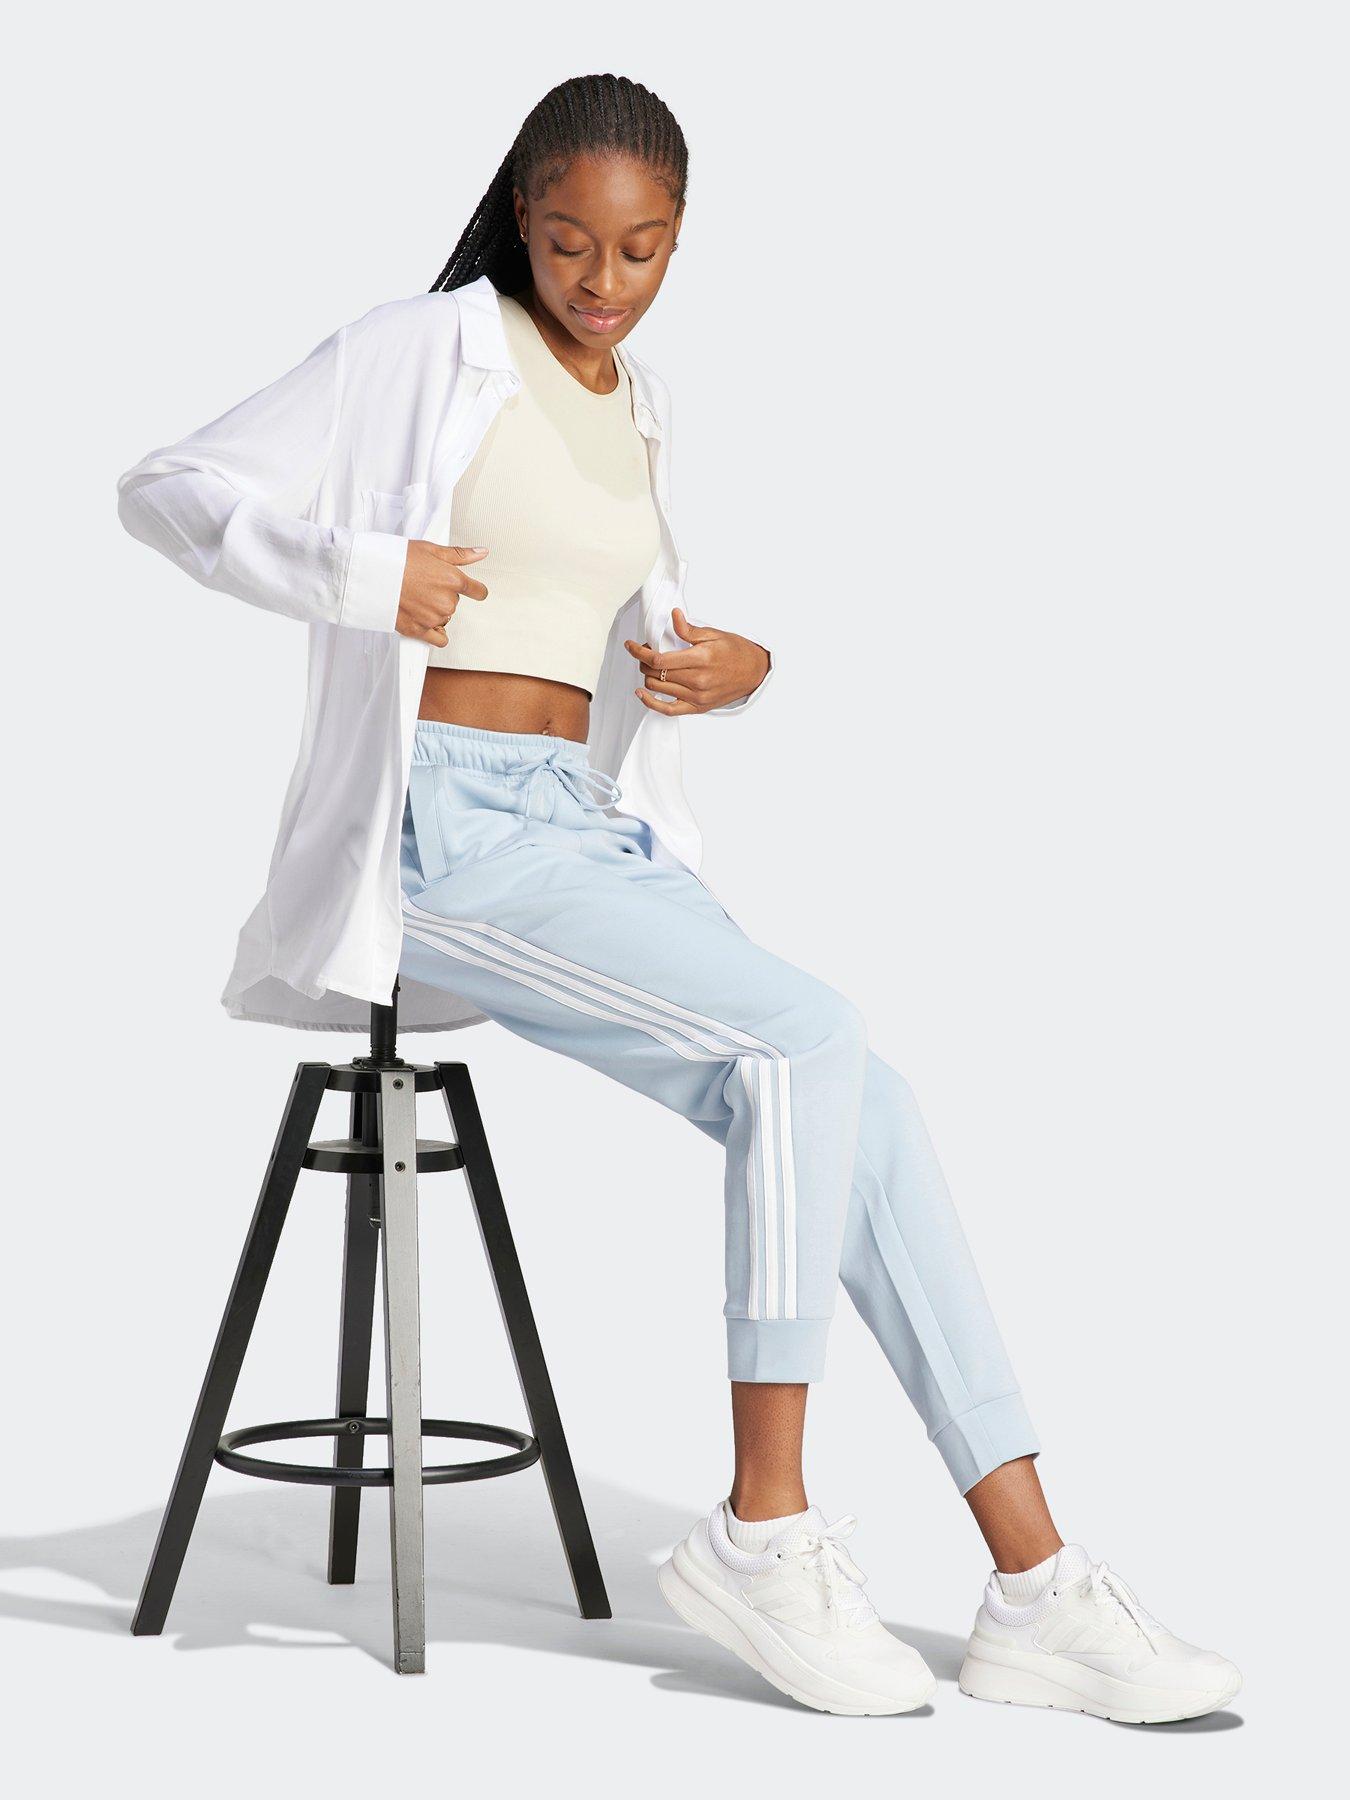 Women's Sportswear Future Icons 3-stripes Regular Tracksuit Bottoms - PINK